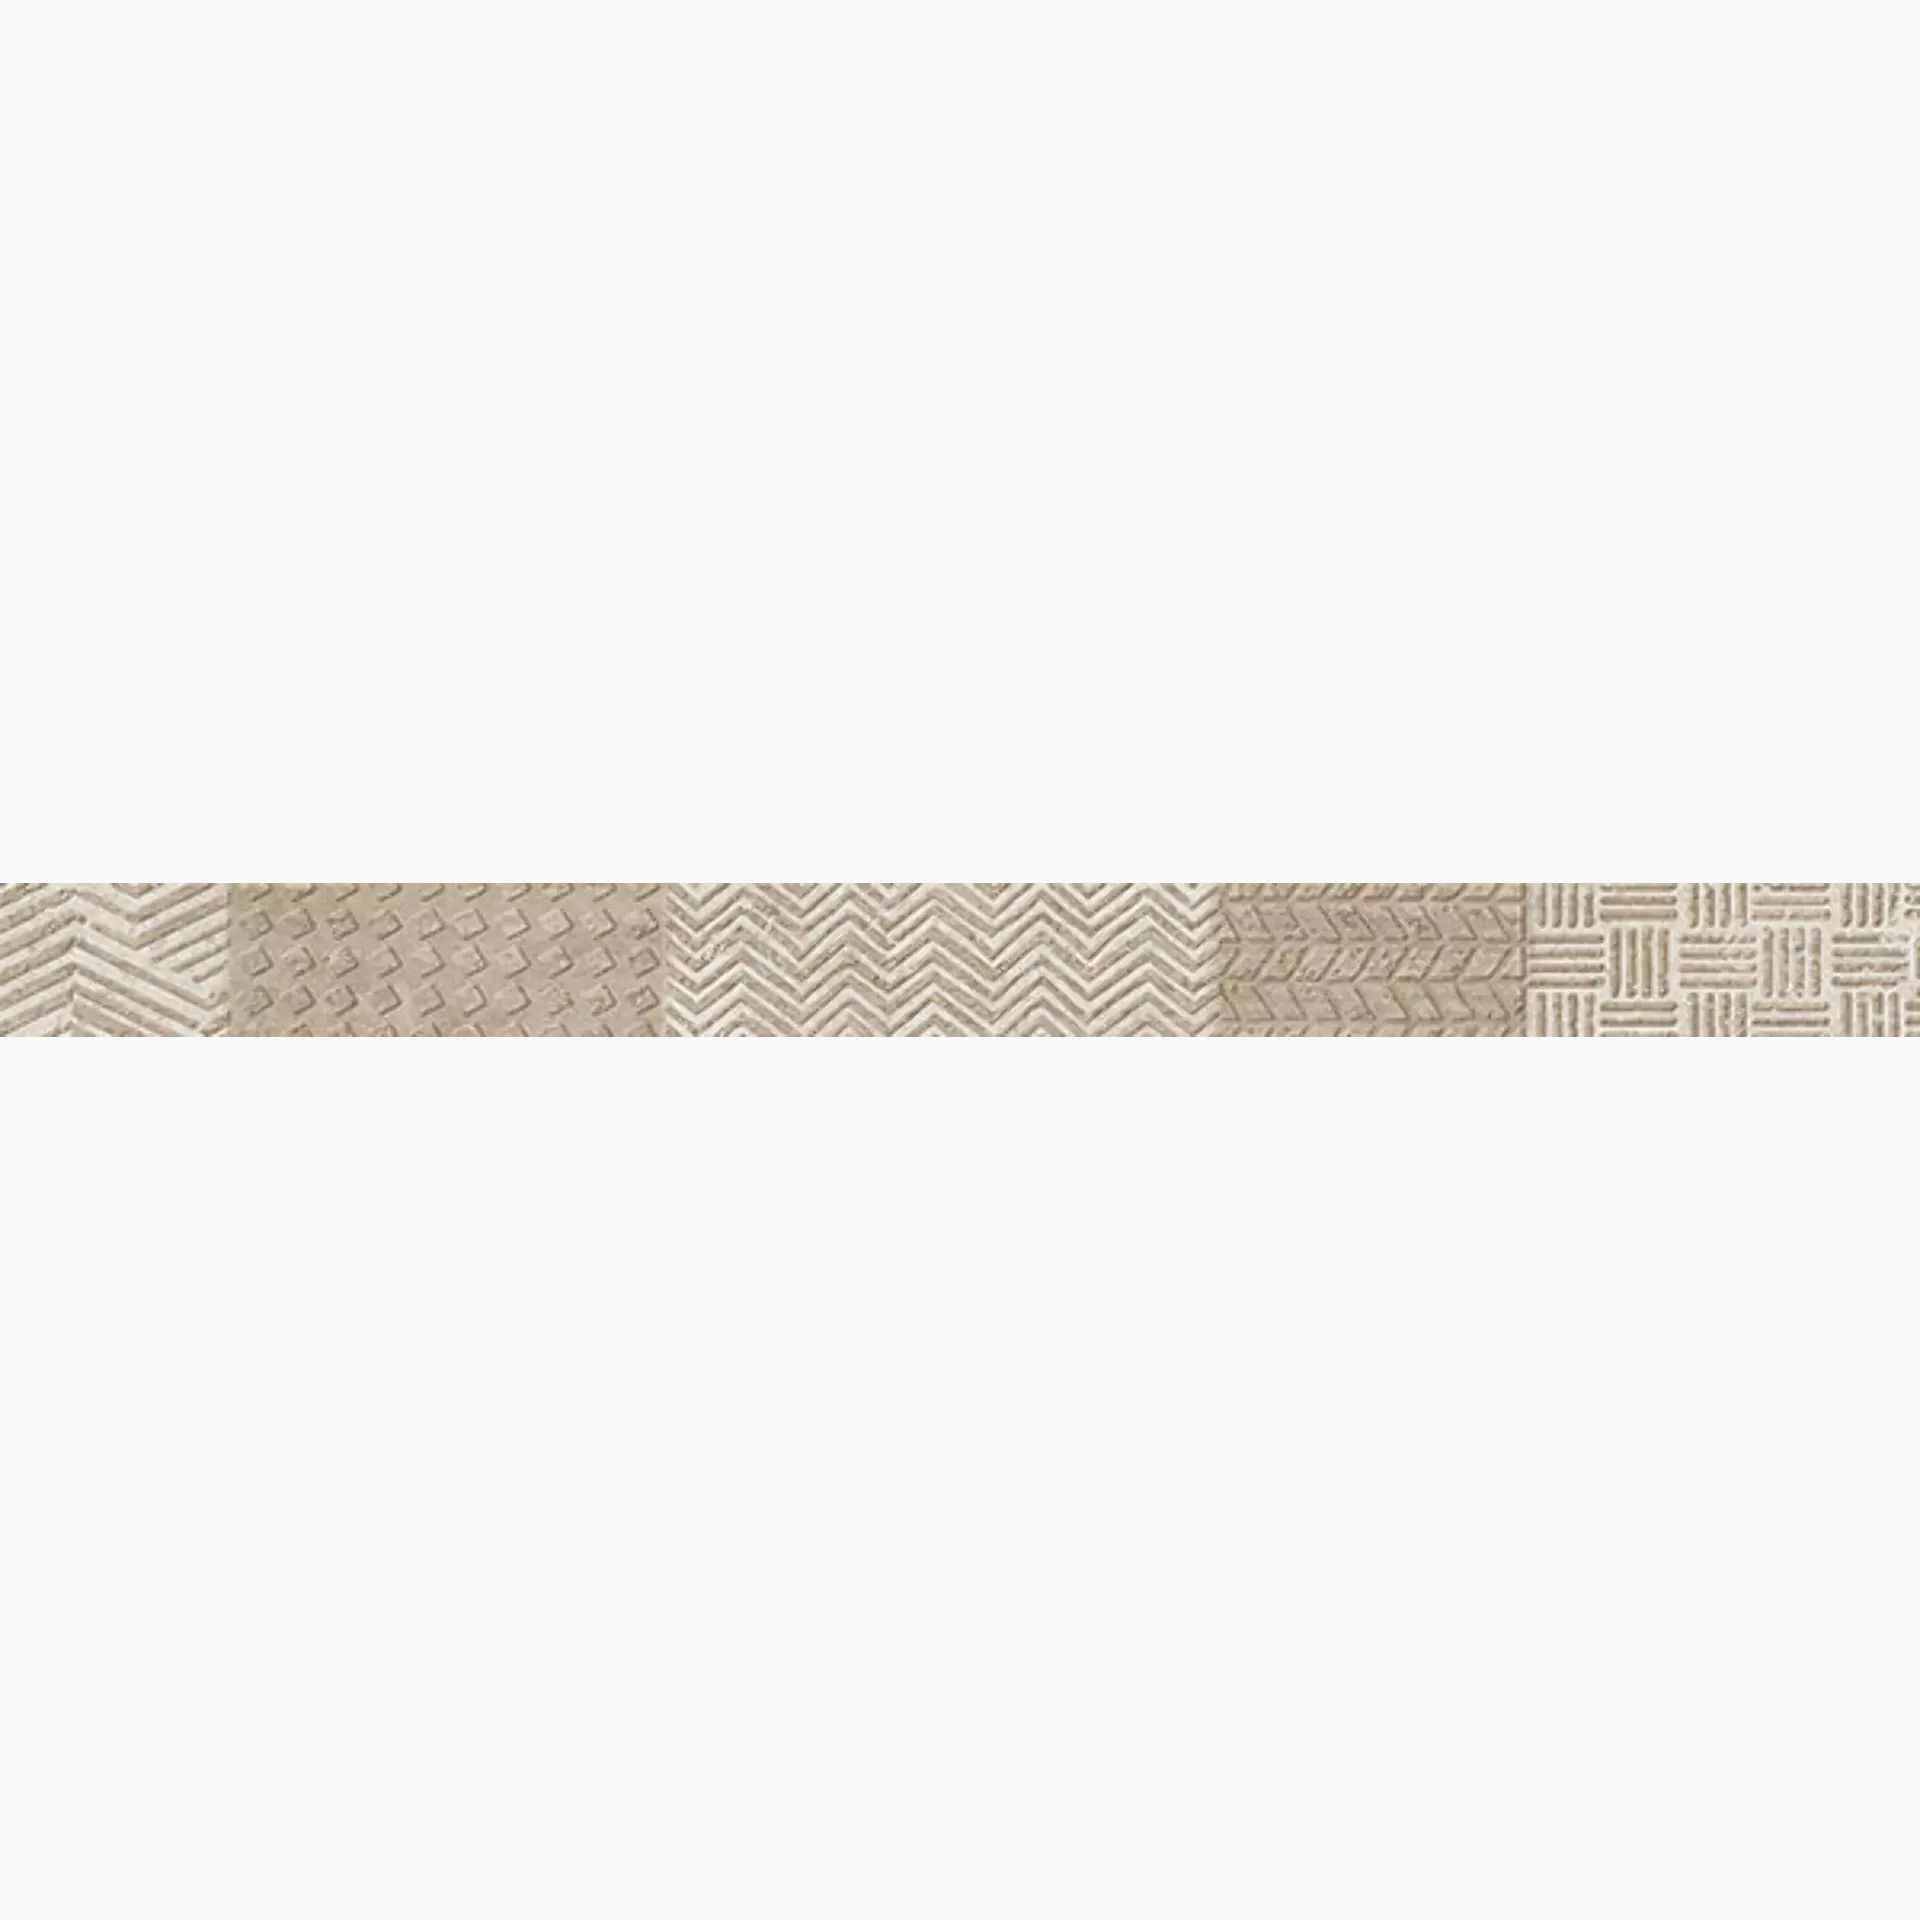 MGM Urban Rope,Ecru Border Eden URBALISEDEROEC 4,8x60cm 8,5mm